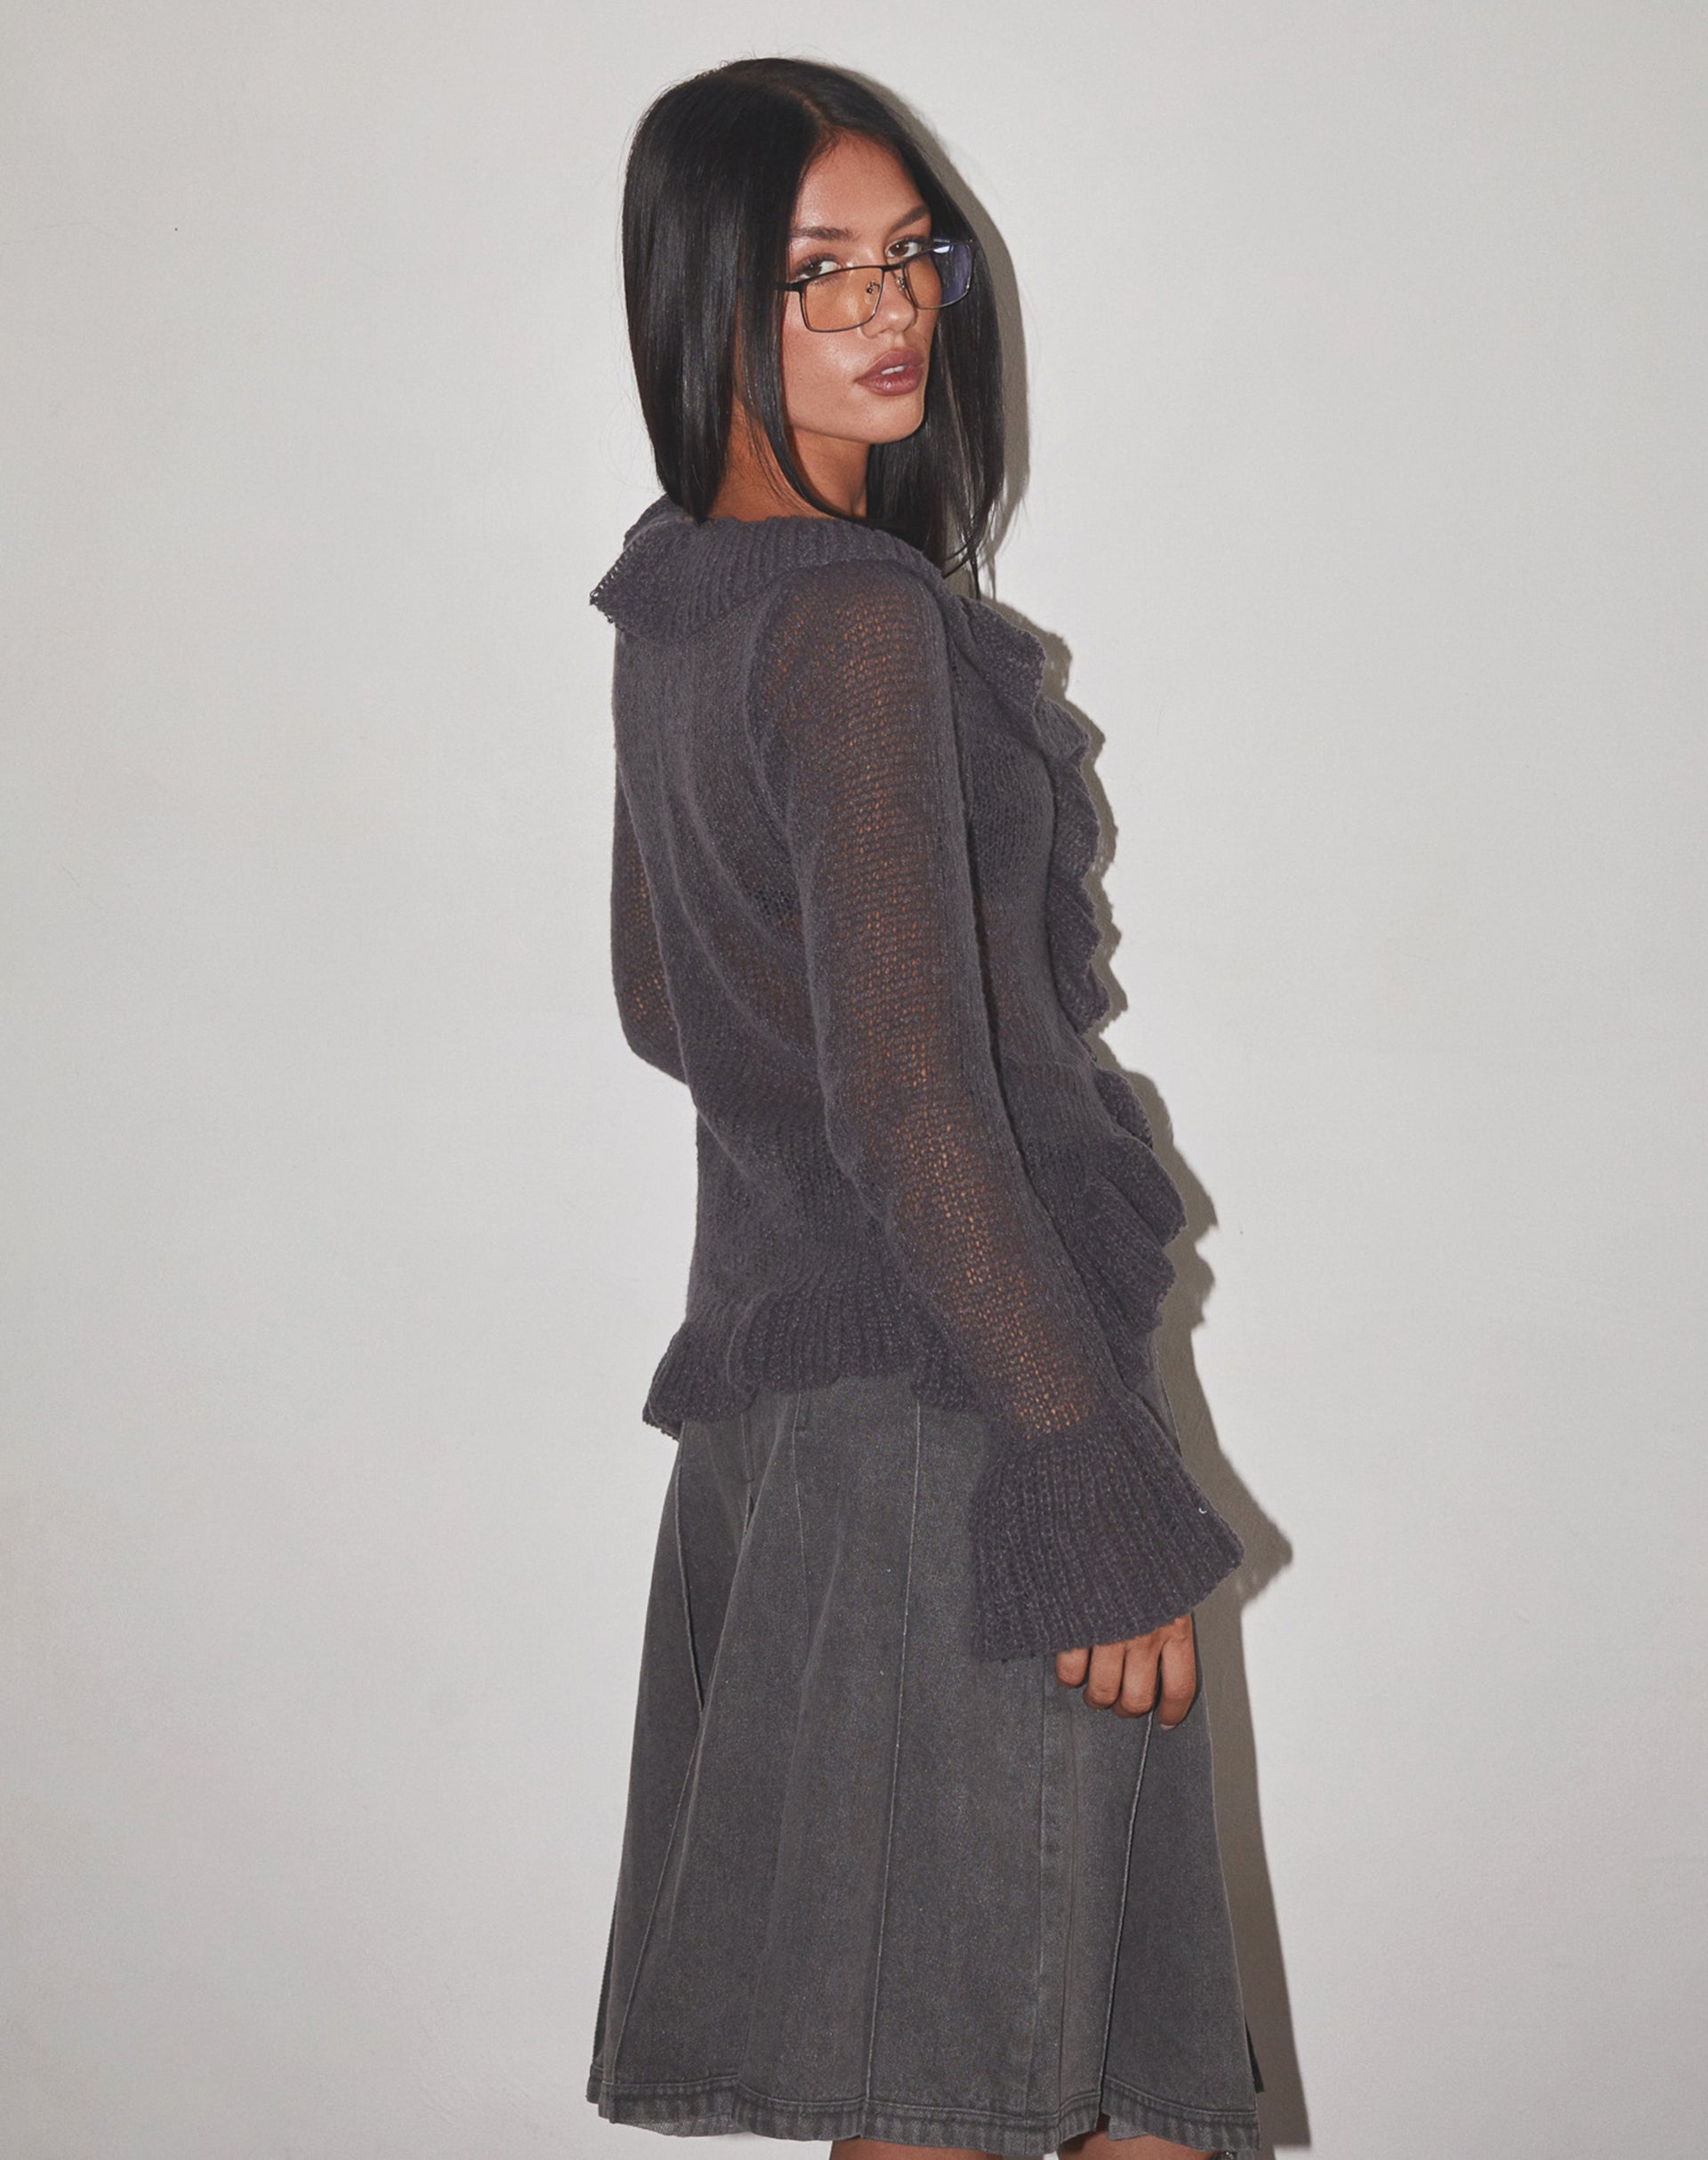 Image of Kendra Ruffle Cardigan in Dark Charcoal Knit